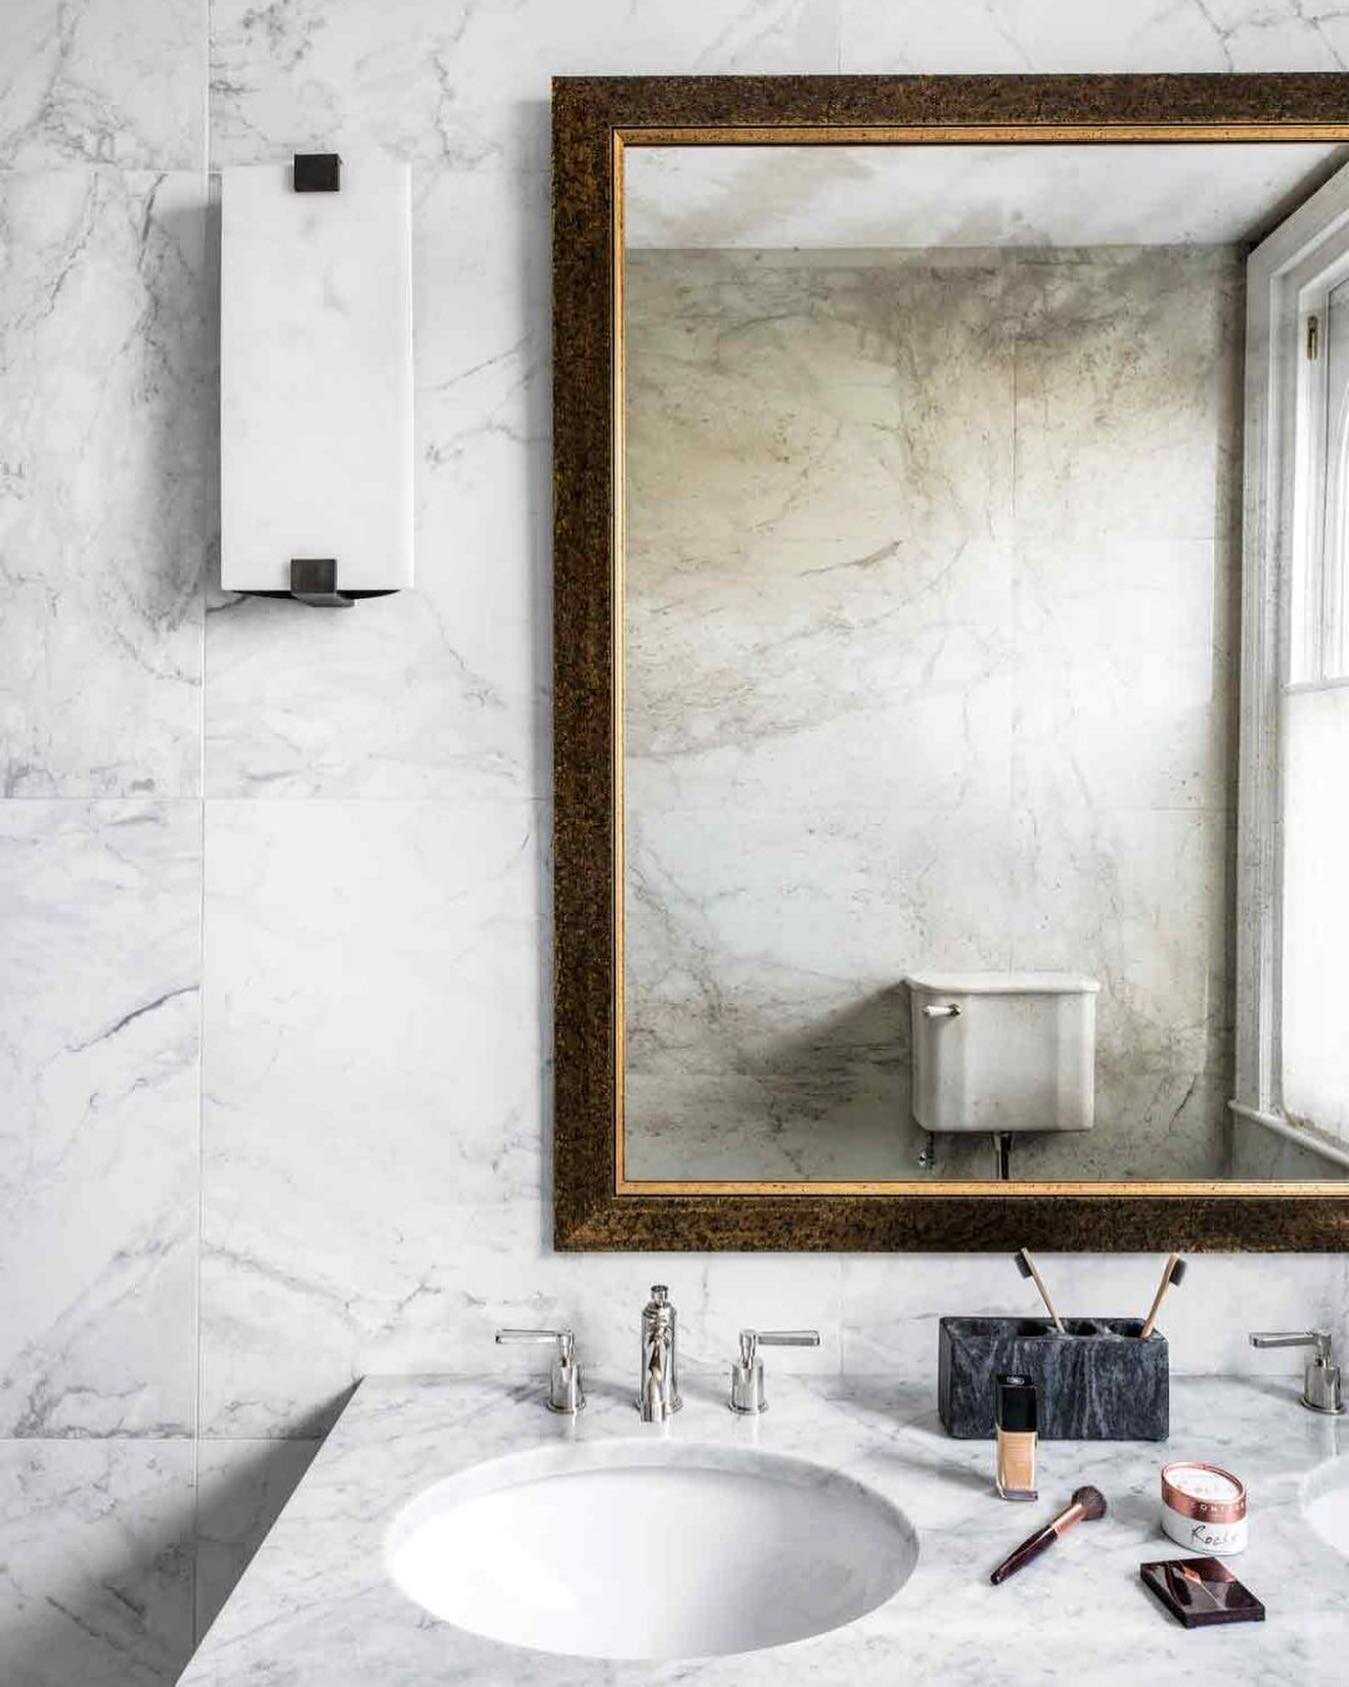 Elegance and simplicity in West London House.
.
.
#reflection #bathroomdesign #marble #tiles #bathroomdecor #bathroomdetails #interiordesign #mirror #decor #interiorstyling #inteiorarchitect #londoninteriordesigner #marblesink #lefroybrooks #mirror 
